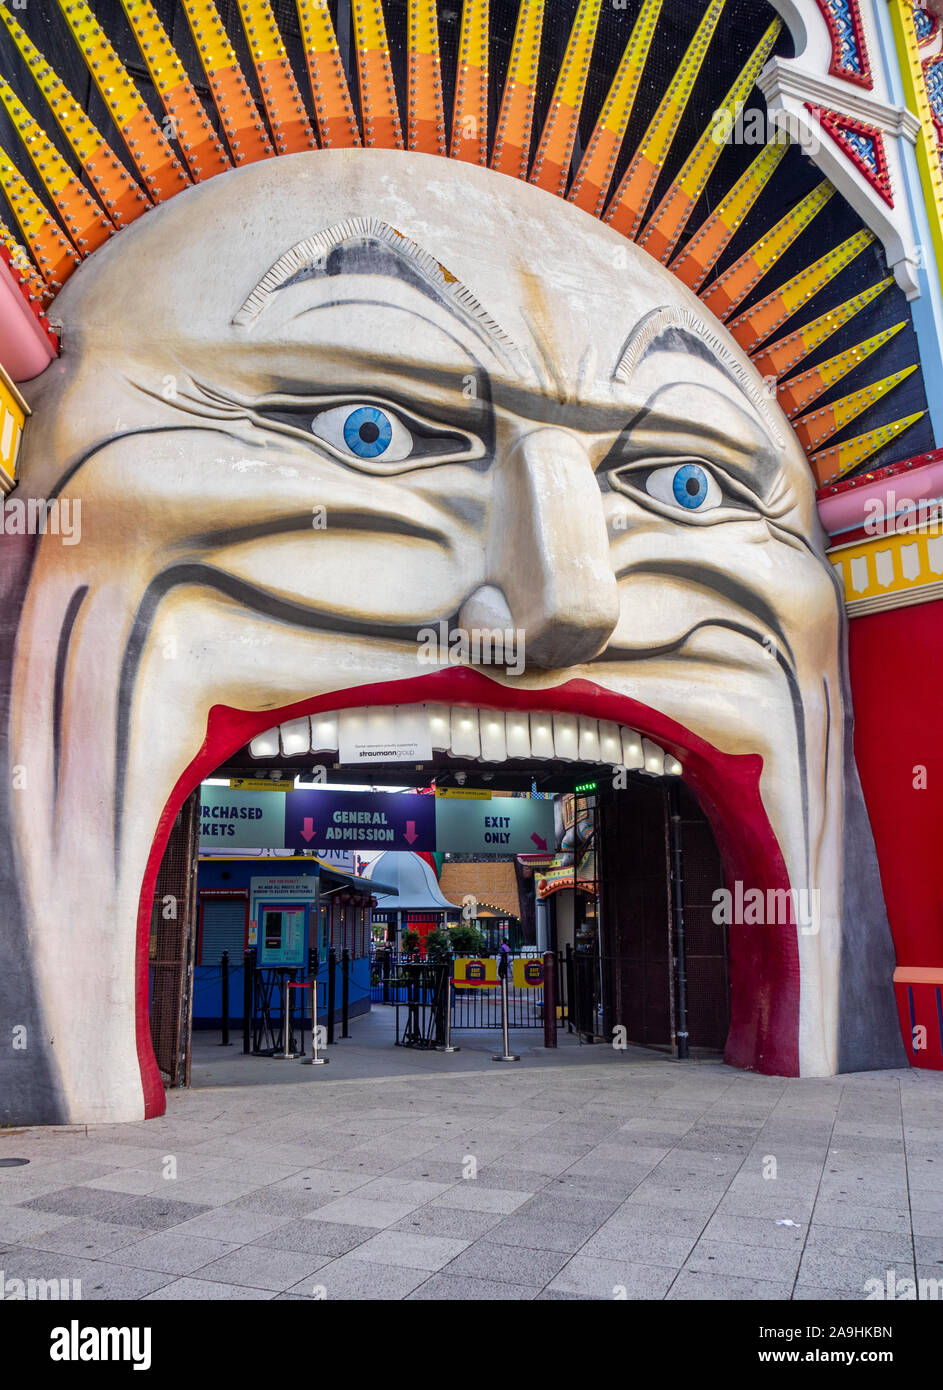 Iconic Mr Moon Face entrance to Luna Park amusement park fairground in St Kilda Melbourne Victoria Australia. Stock Photo